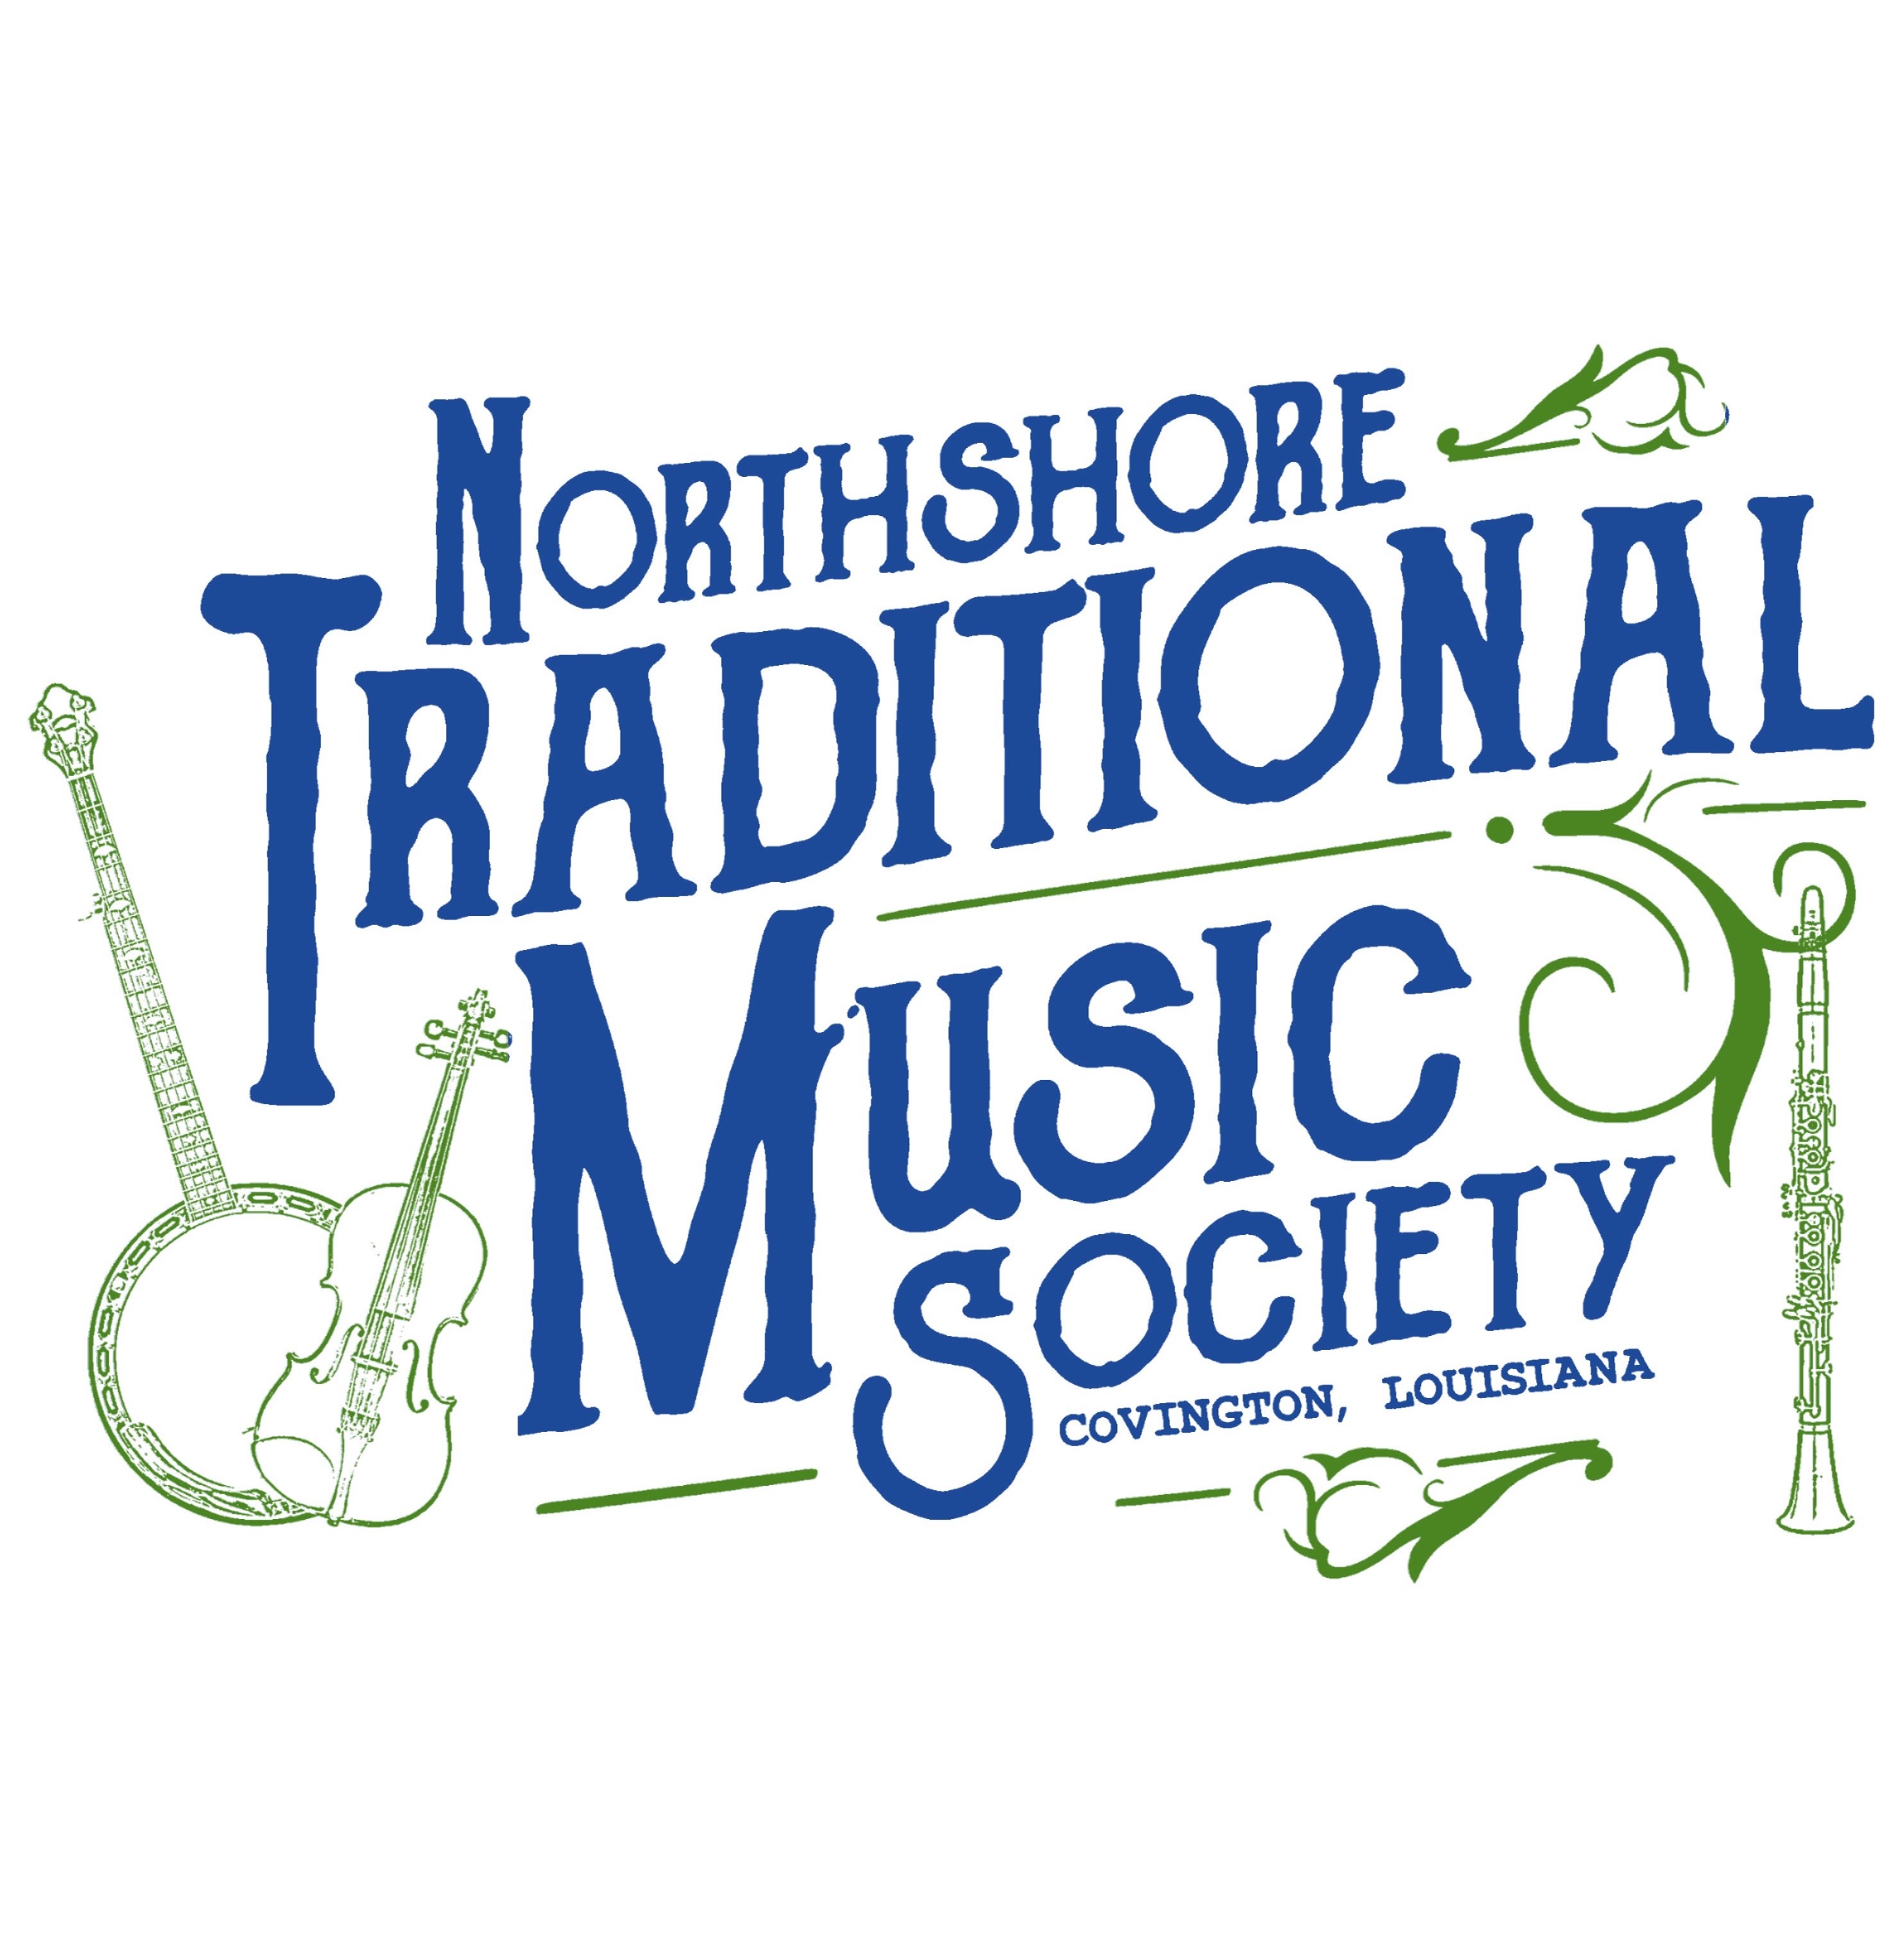 Northshore Traditional Music Society logo